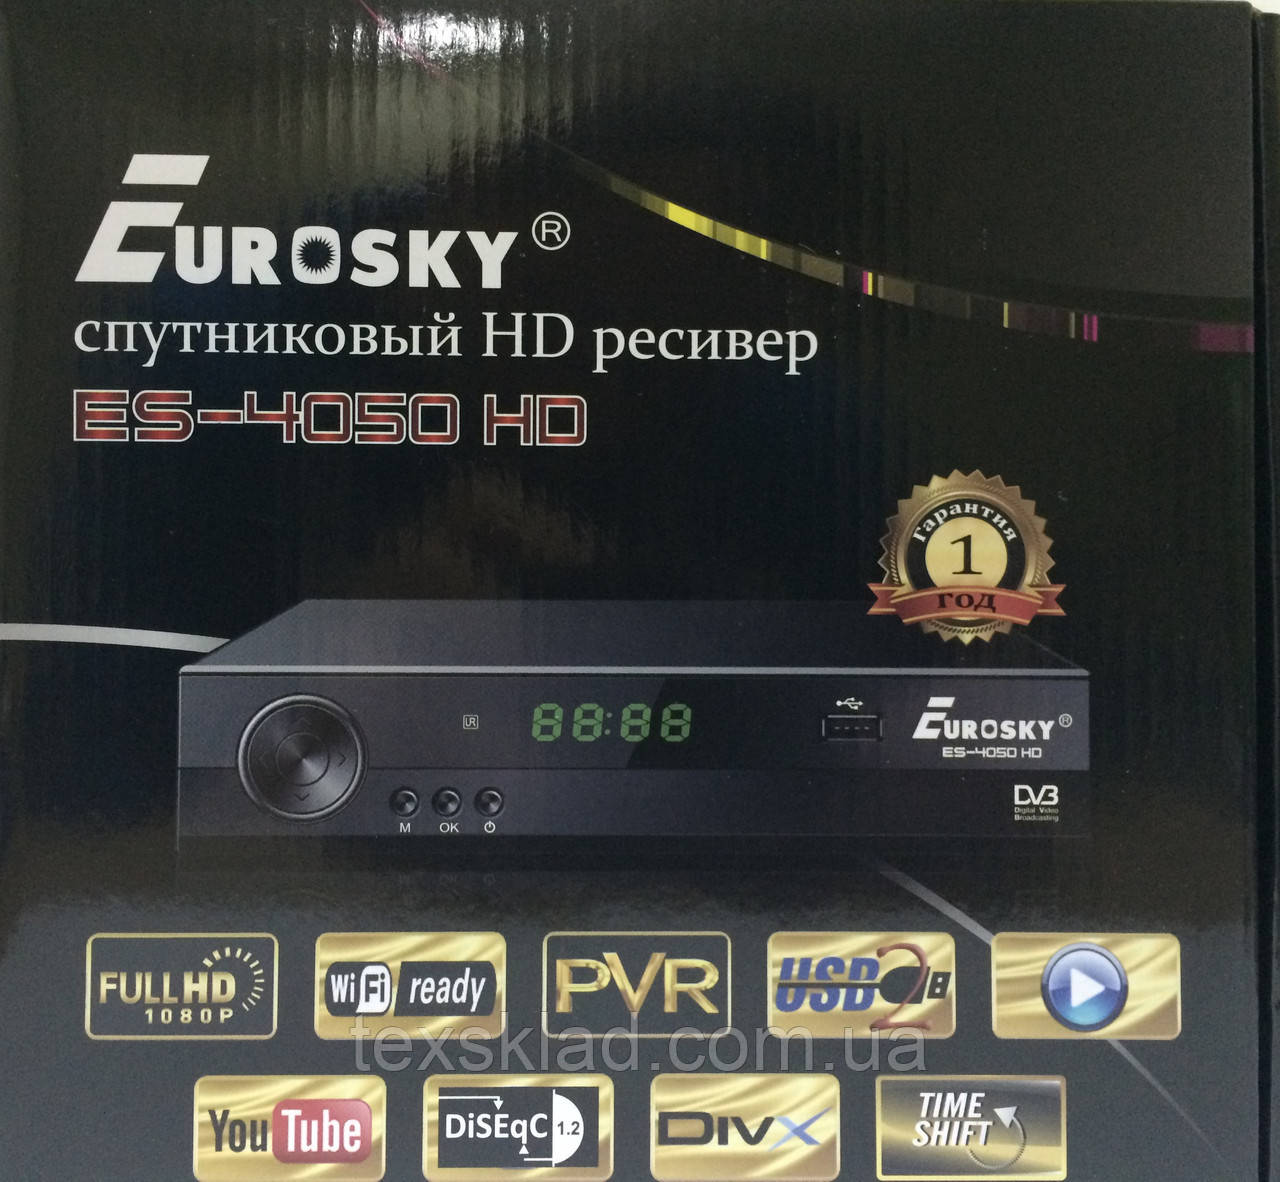 Супутниковий HD ресивер Eurosky ES-4050 HD (Wi-Fi/FULL HD/You Tube)